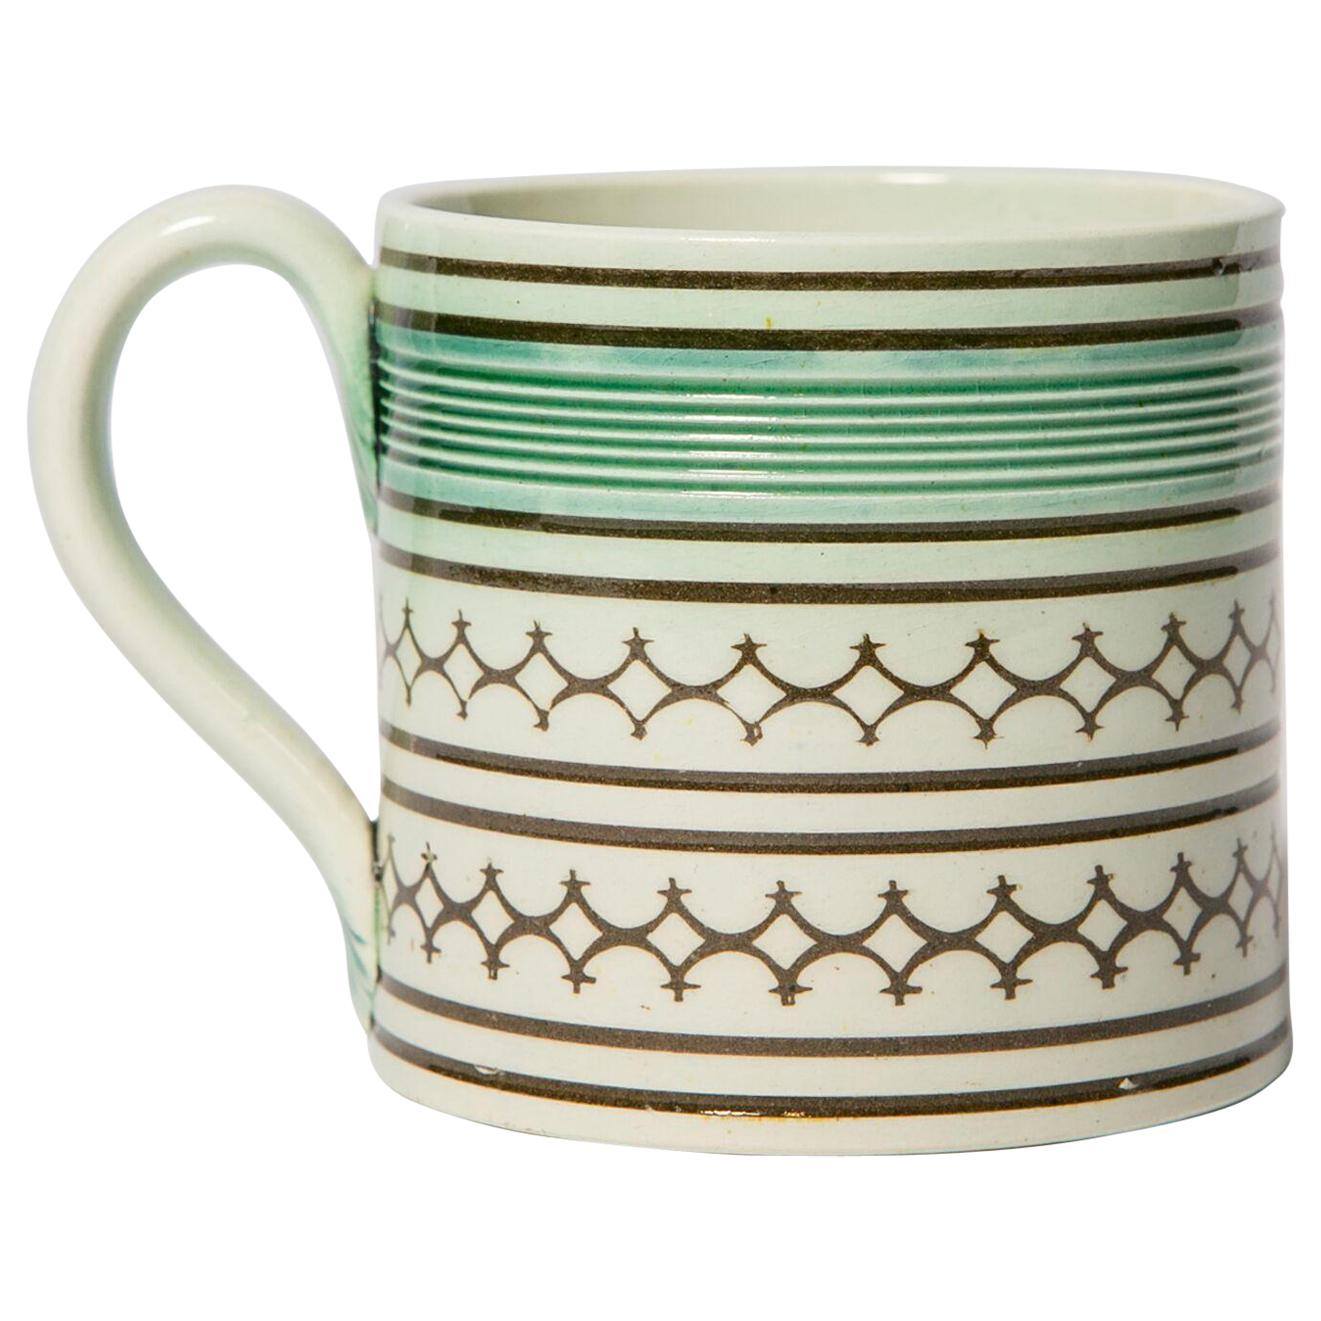 Small Mochaware Mug England, circa 1820